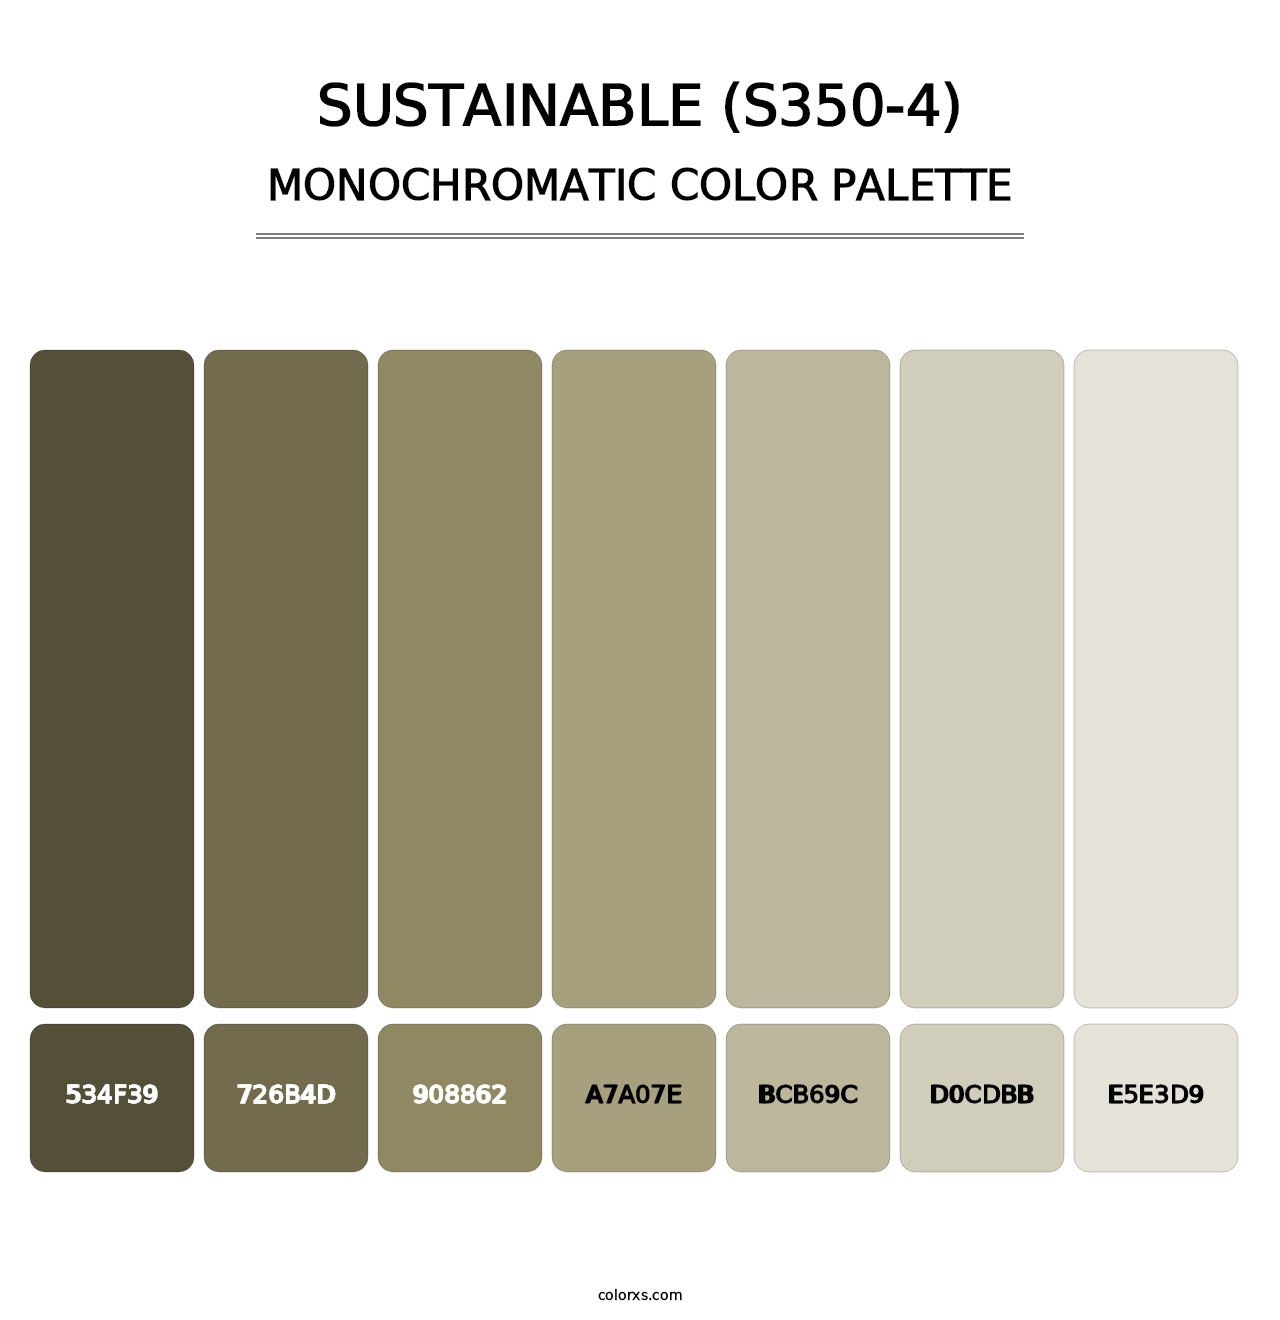 Sustainable (S350-4) - Monochromatic Color Palette